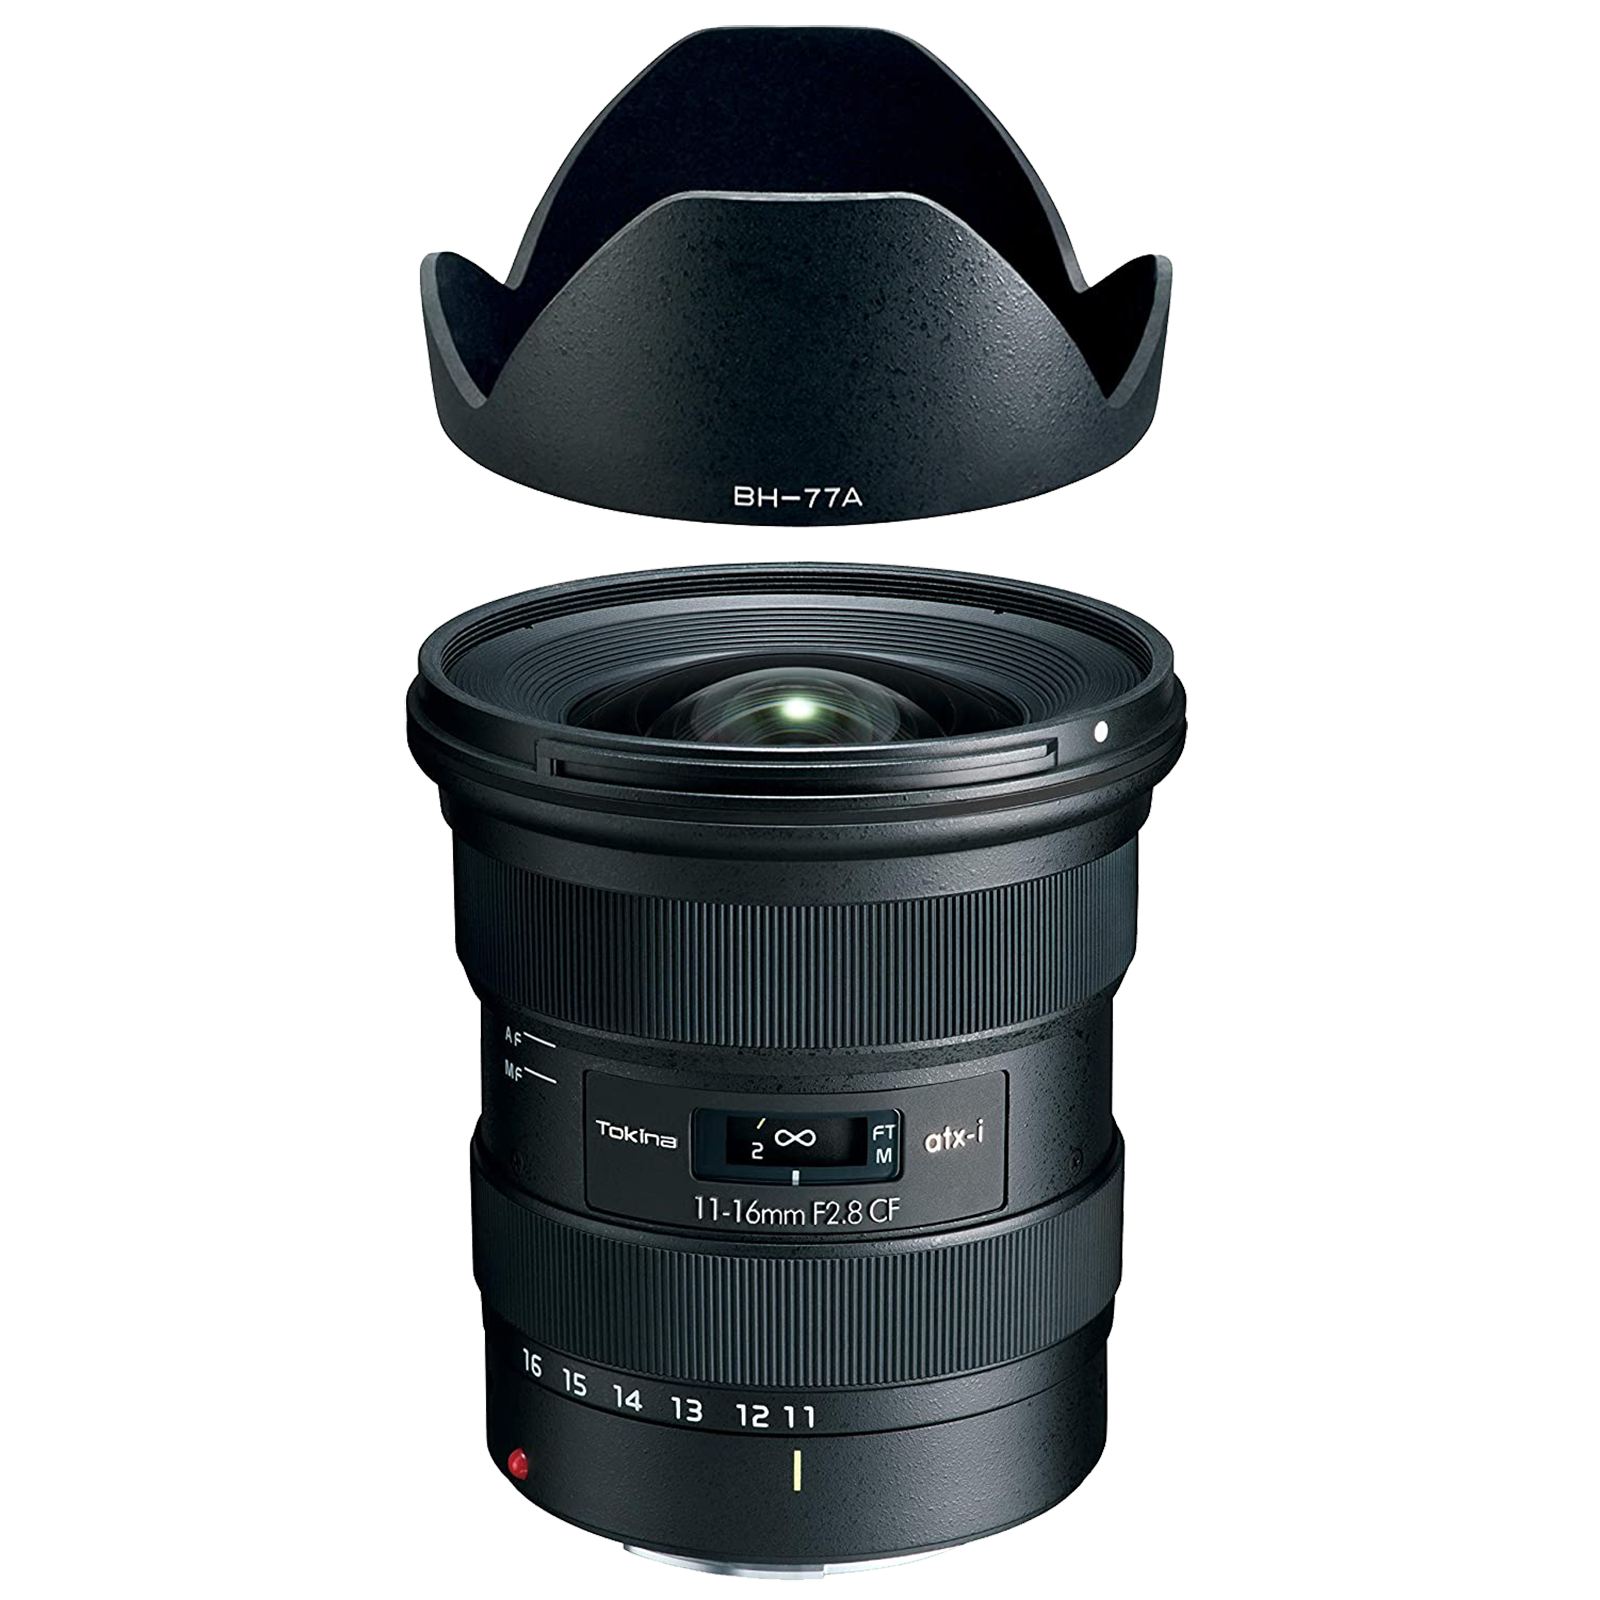 Tokina Atx-i 11-16 mm Max-f/2.8 And Min-f/22 Wide Angle Lens (Internal Focus, 12X0964K01, Black)